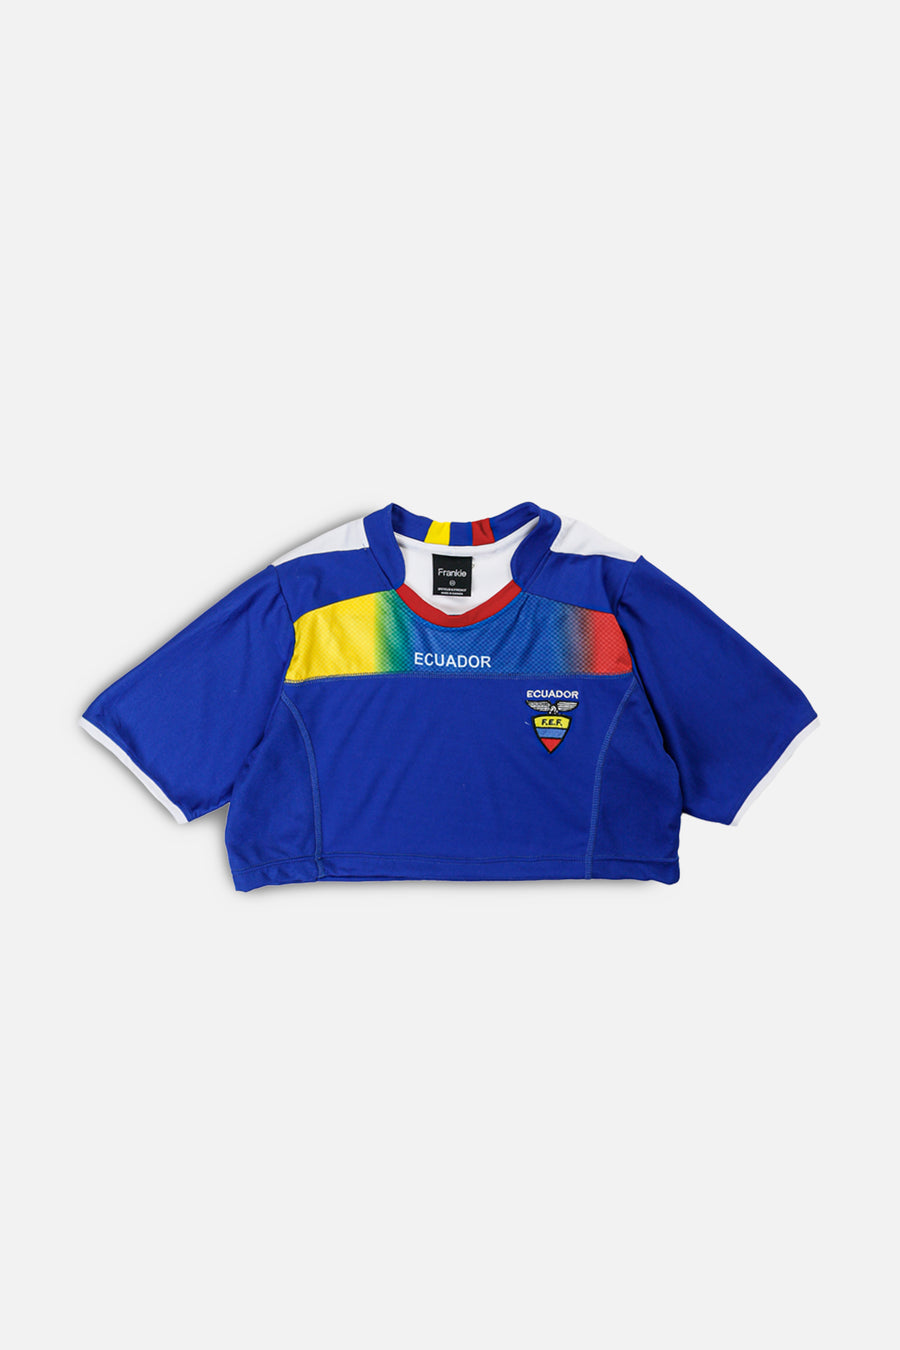 Rework Crop Ecuador Soccer Jersey - XS